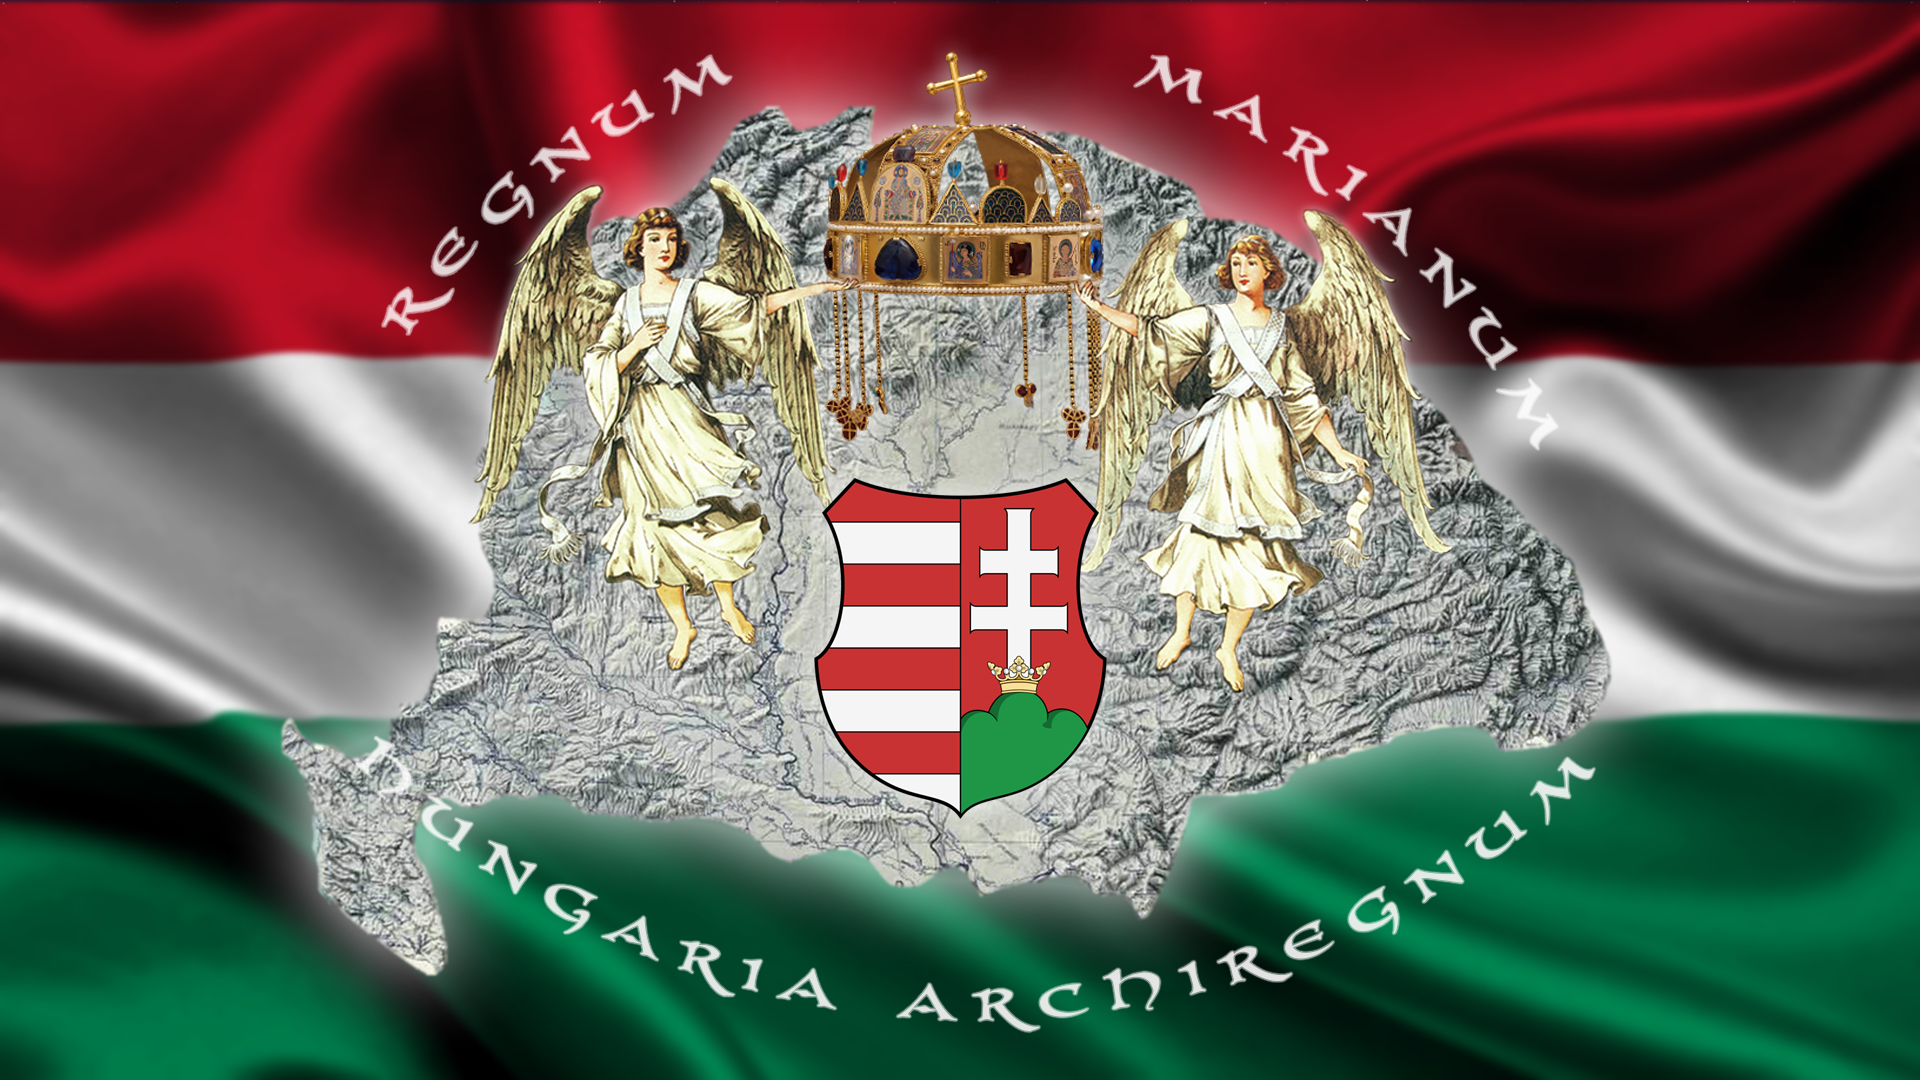 Regnum Marianum - Hungaria Archiregnum - Szent Korona Angyalos cimer